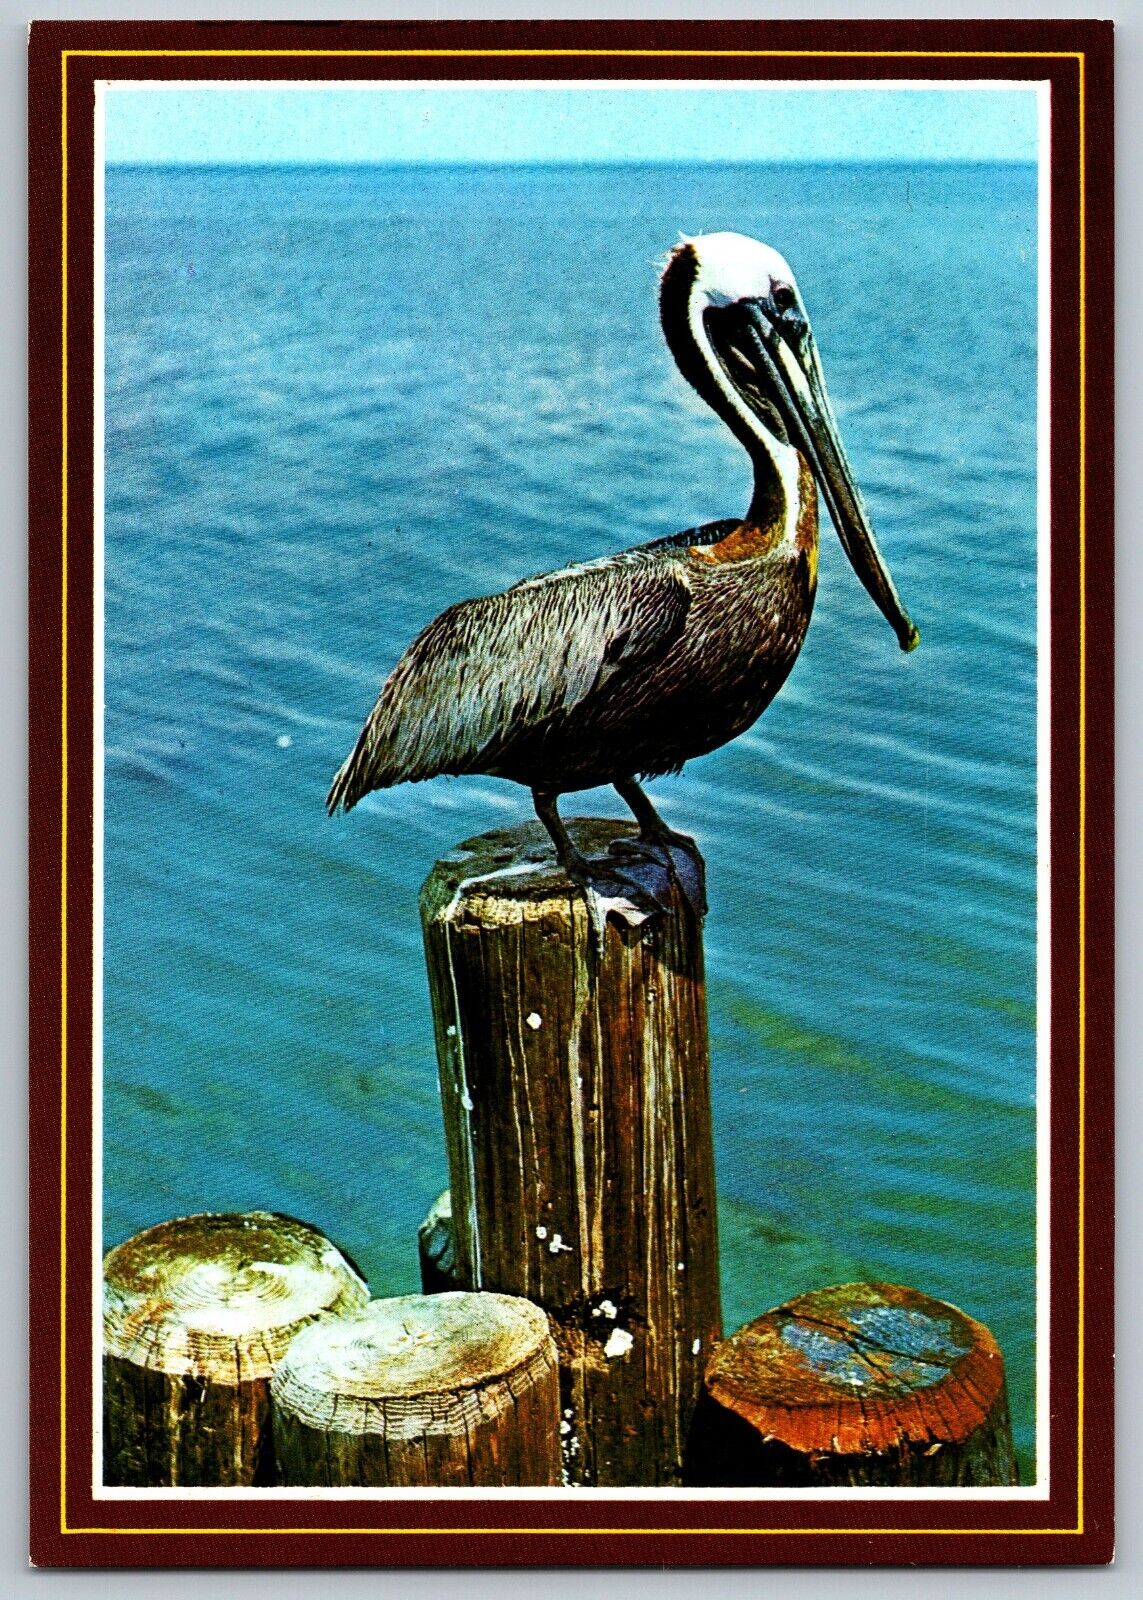 The Picturesque Pelican - Vintage Postcard 4x6 - Unposted